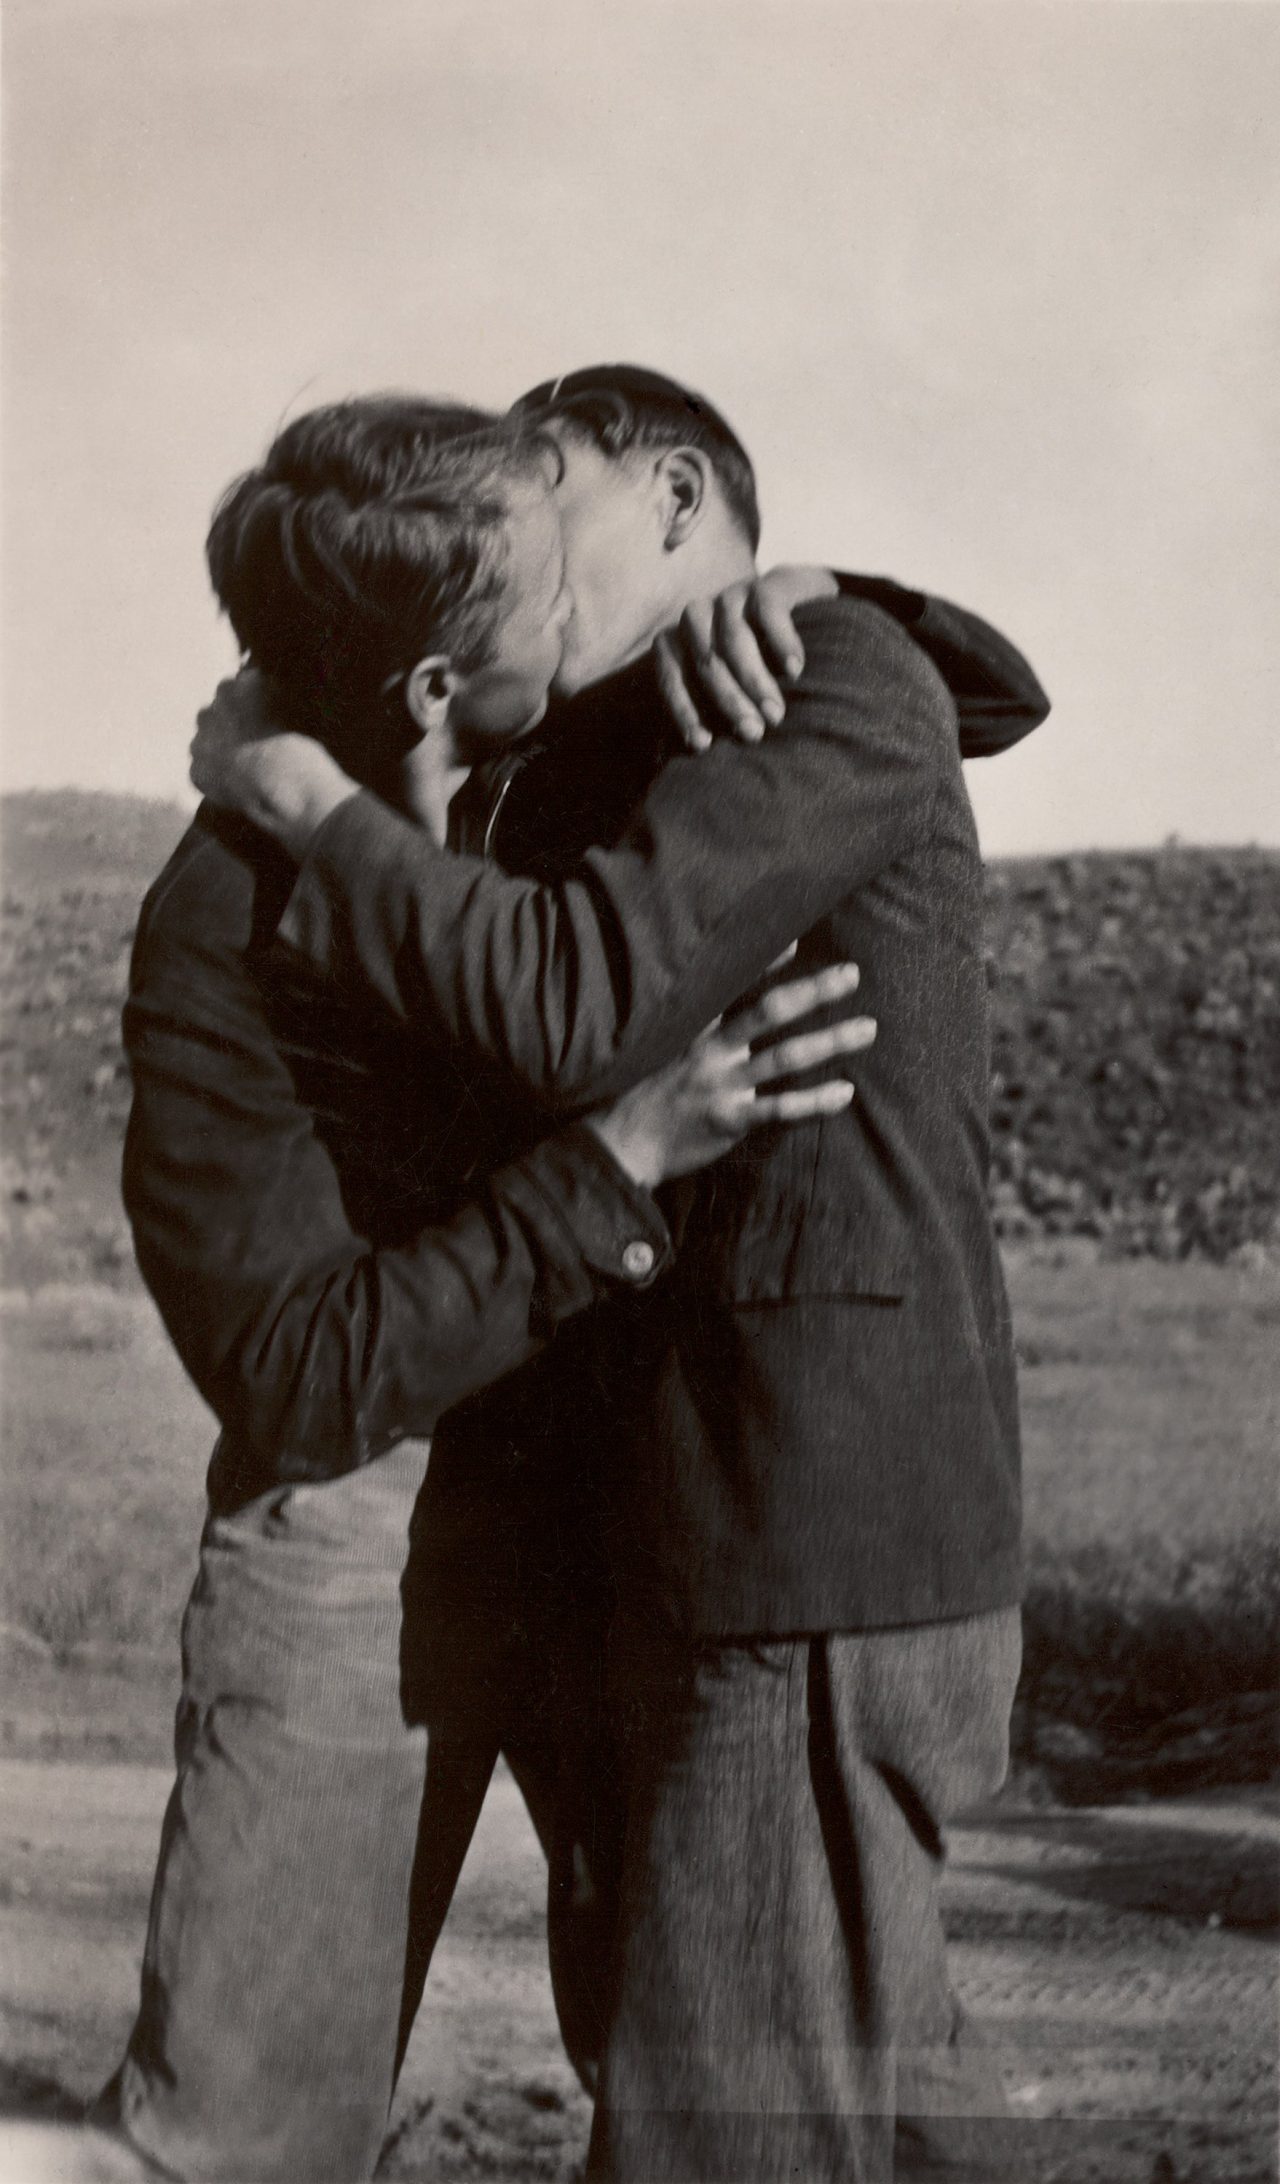 old gay men kissing